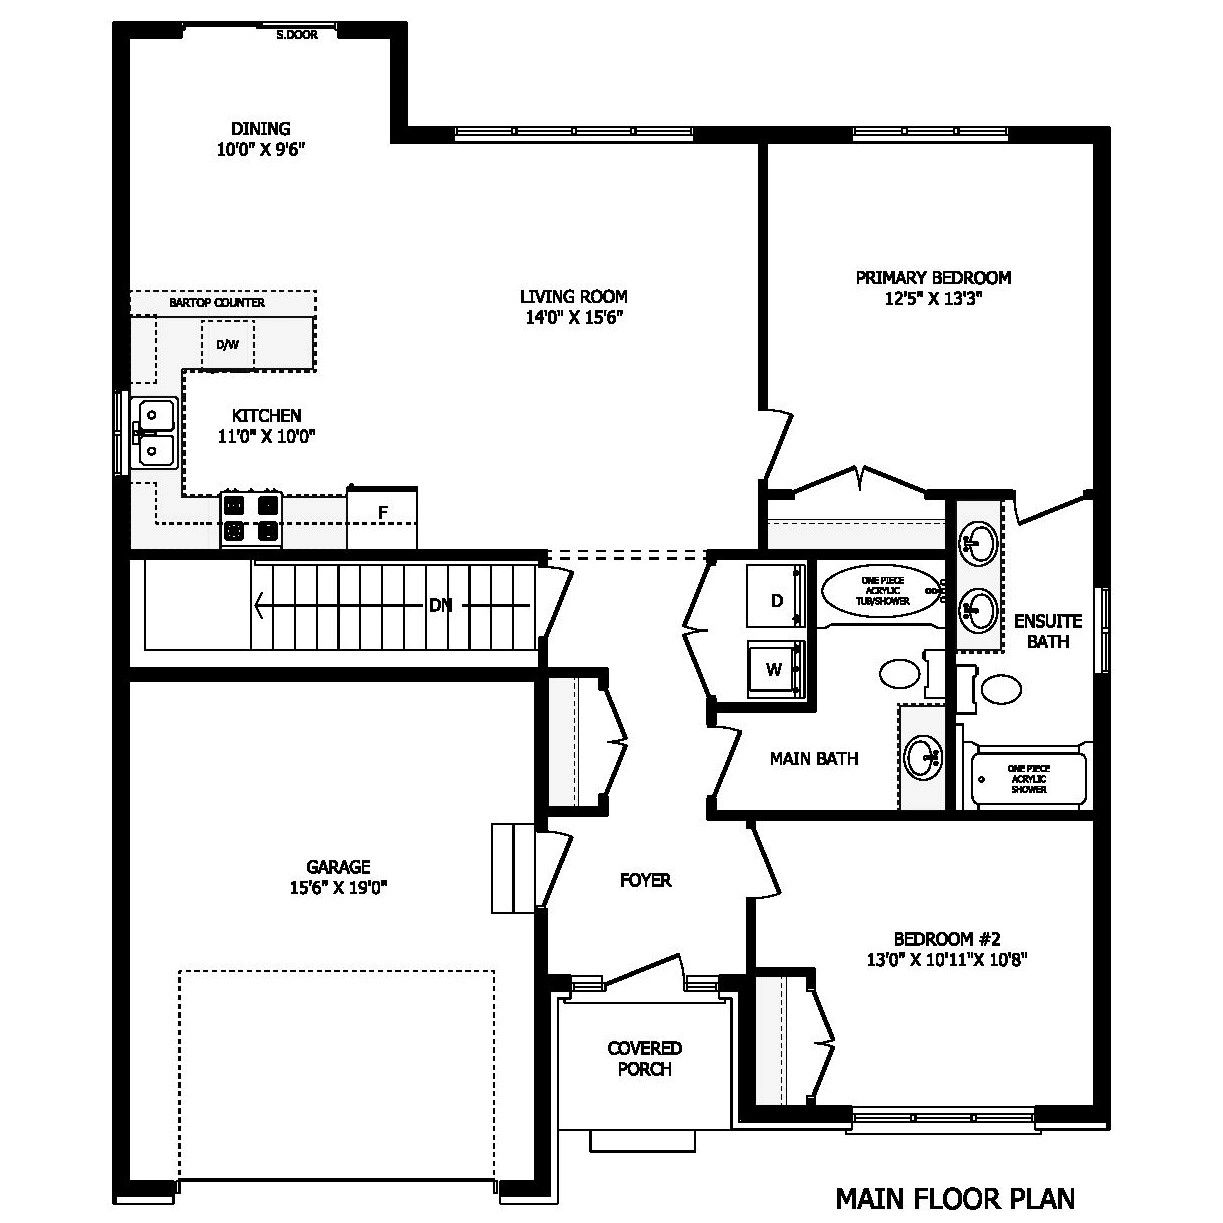 The Simcoe Main Floor Plan
Greenwood Landings
New Homes in Coldwater